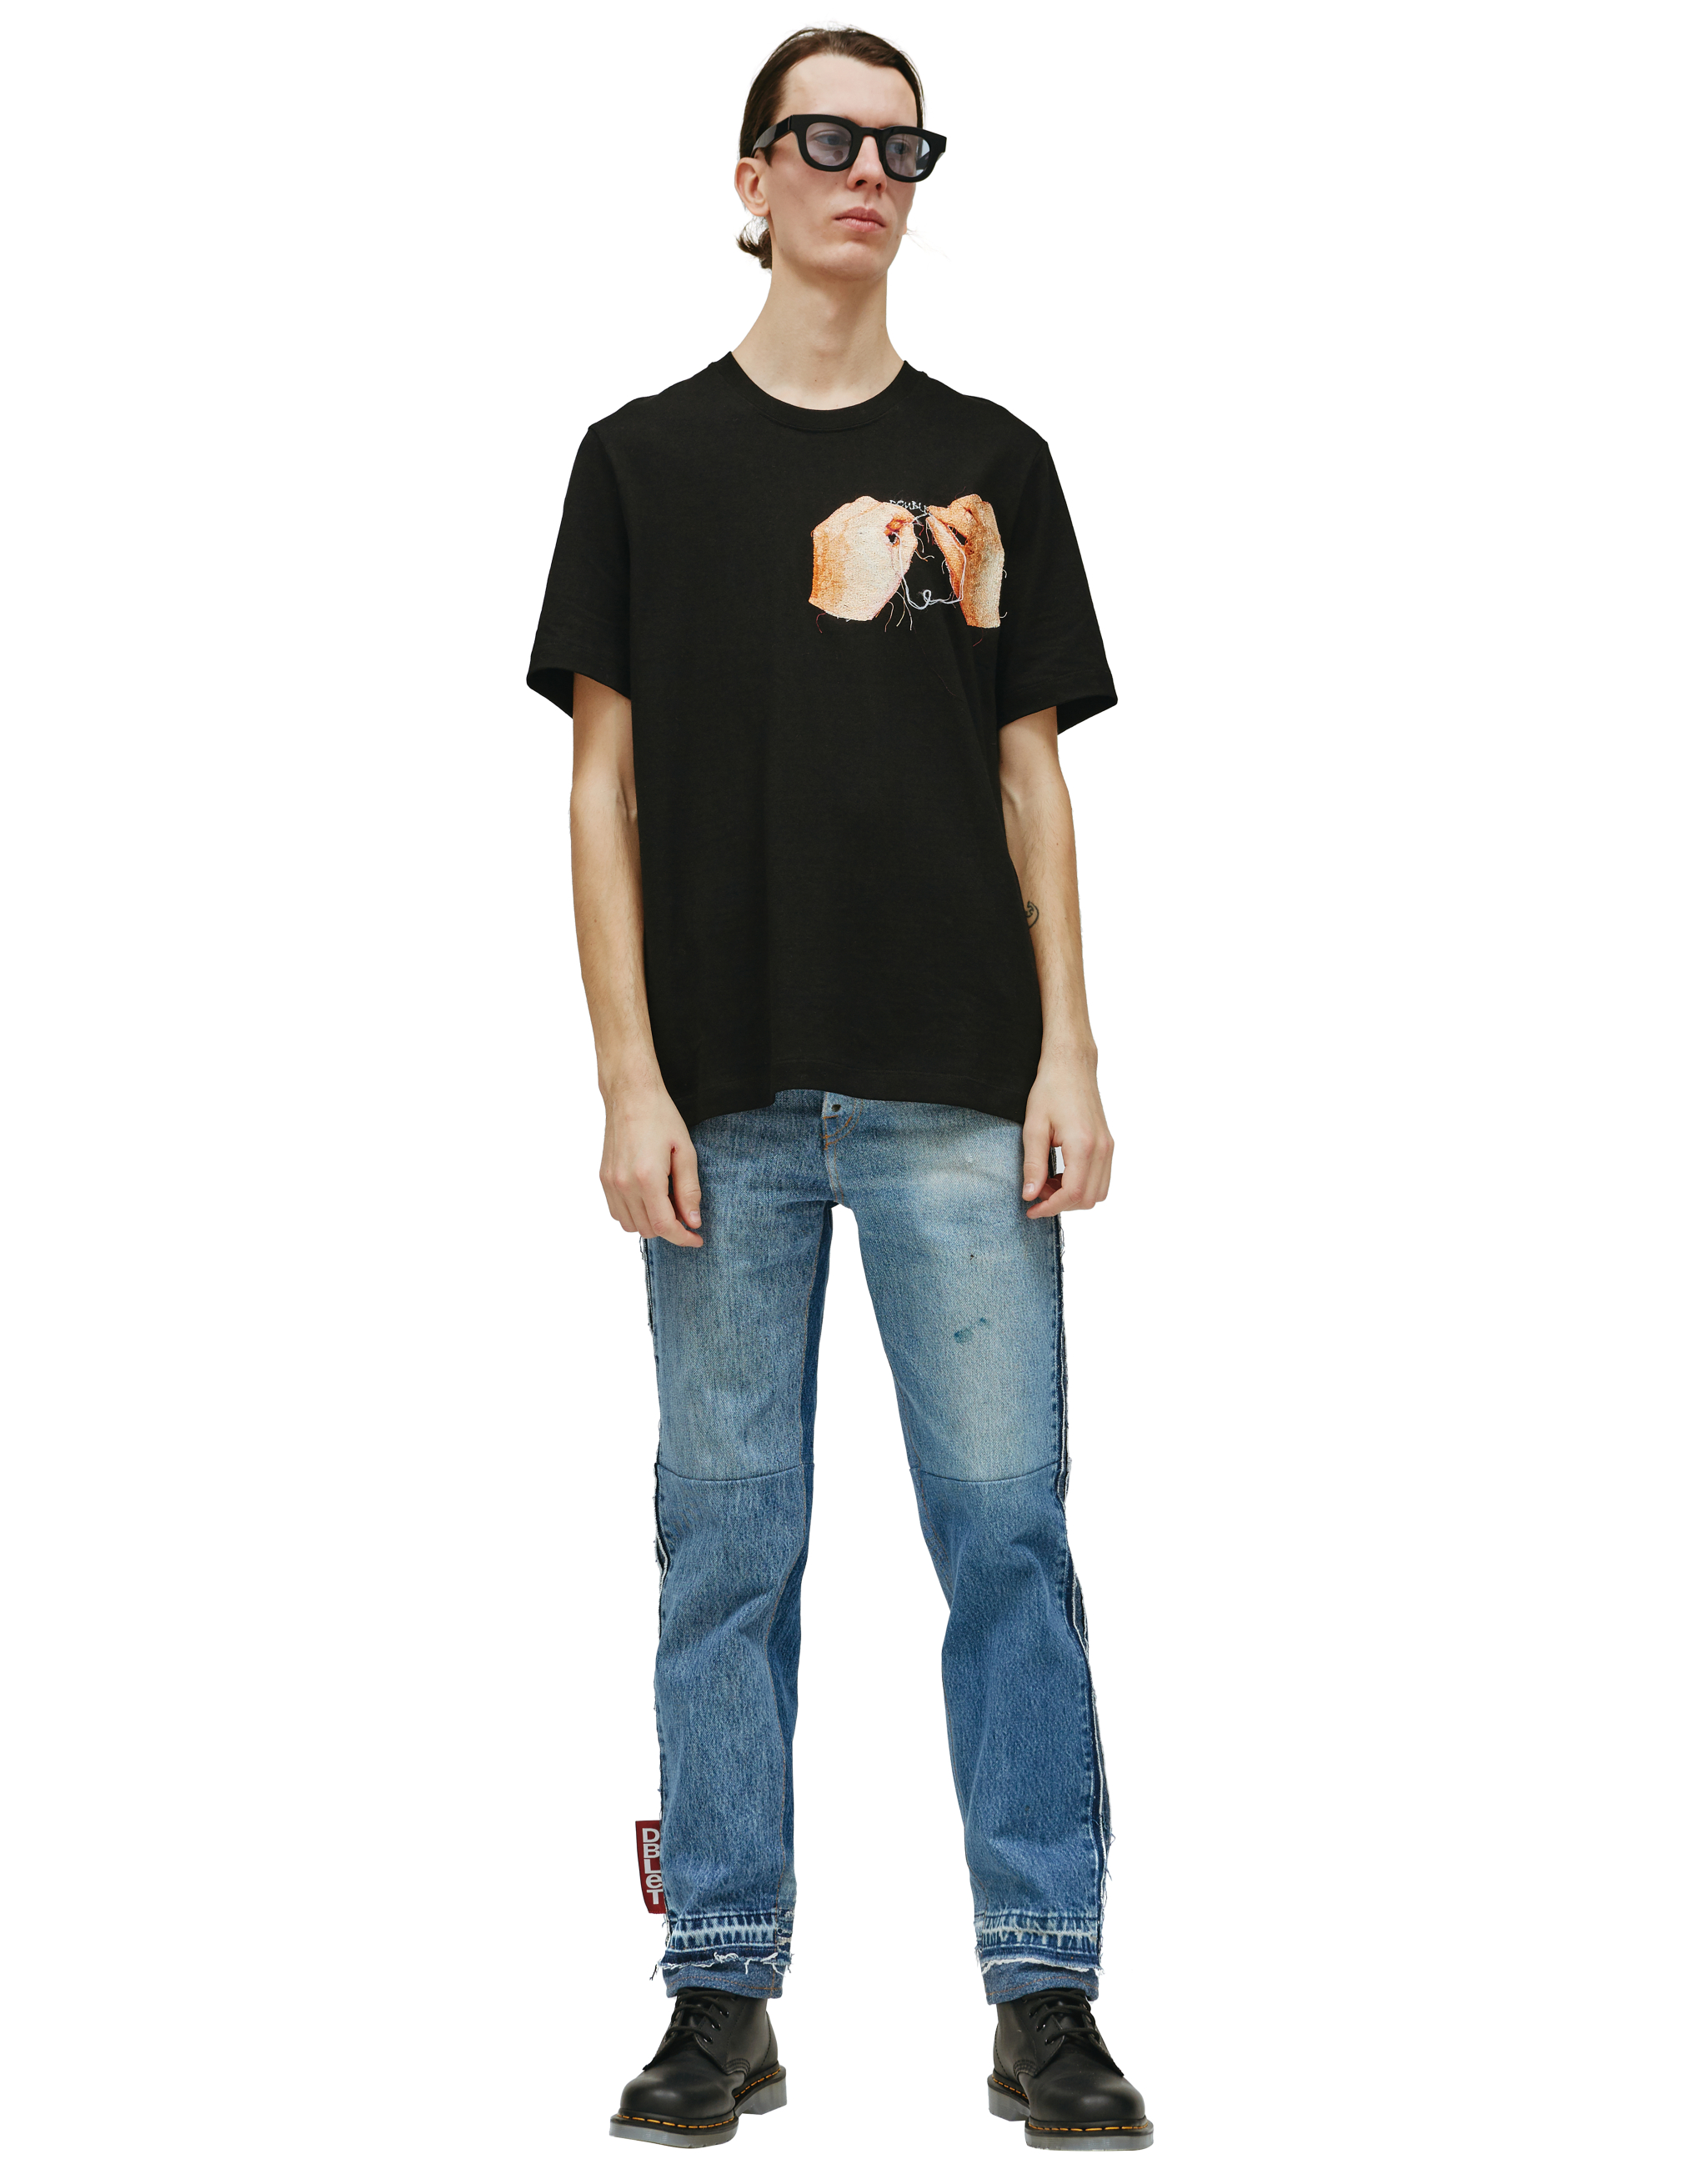 Хлопковая футболка с вышивкой Doublet 22AW33CS237/BLACK, размер M;L